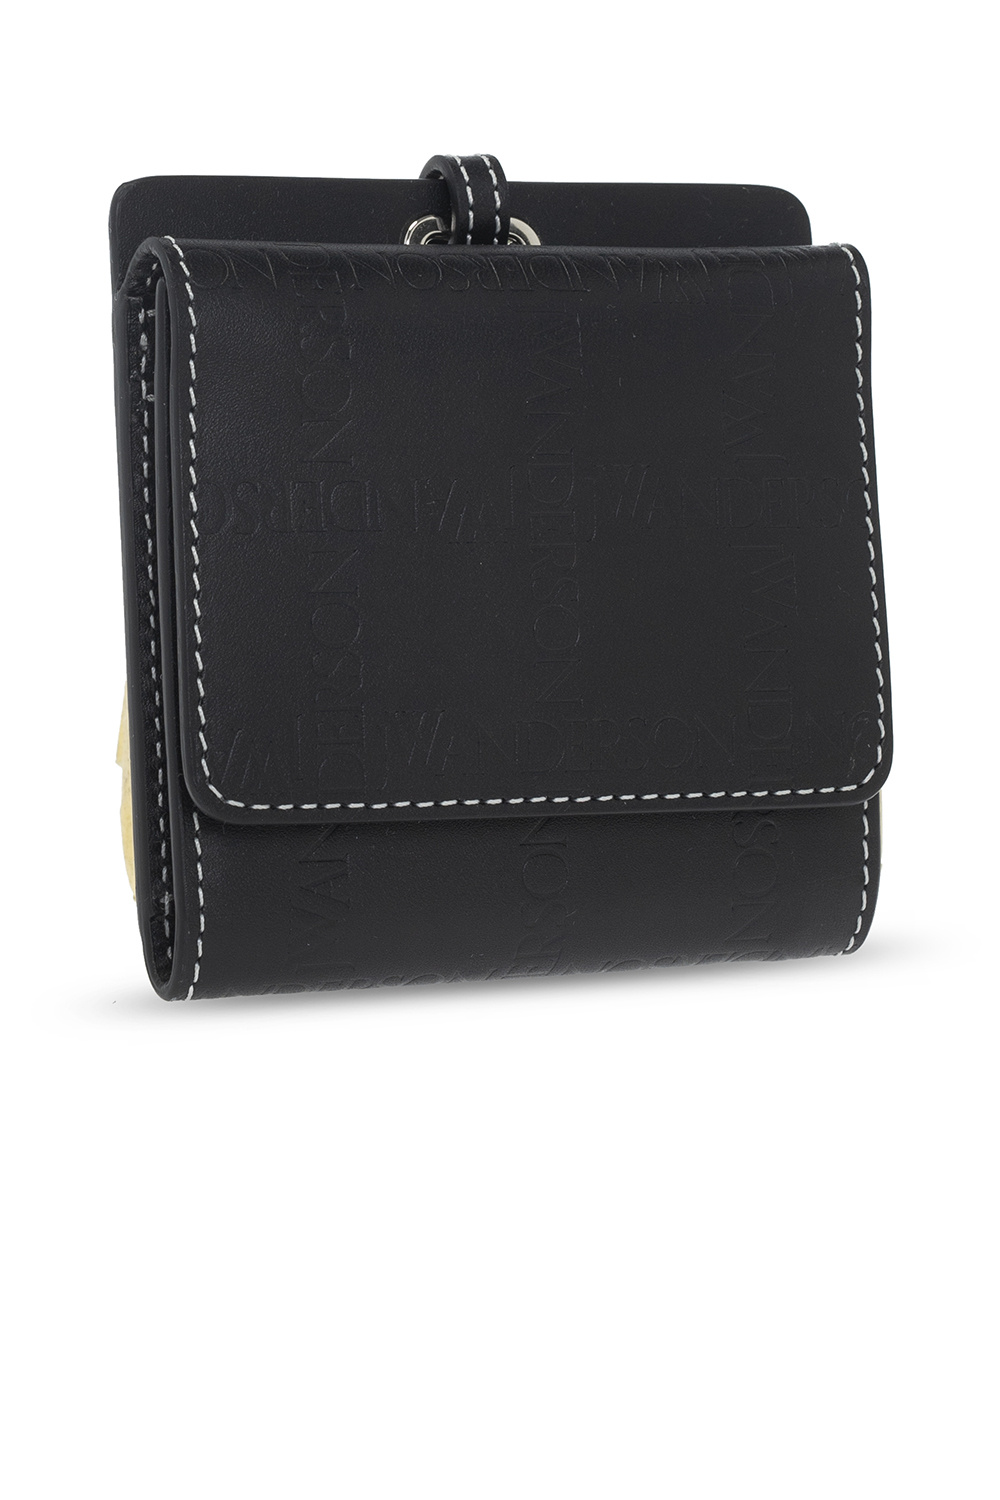 Black Wallet with logo JW Anderson - Vitkac France